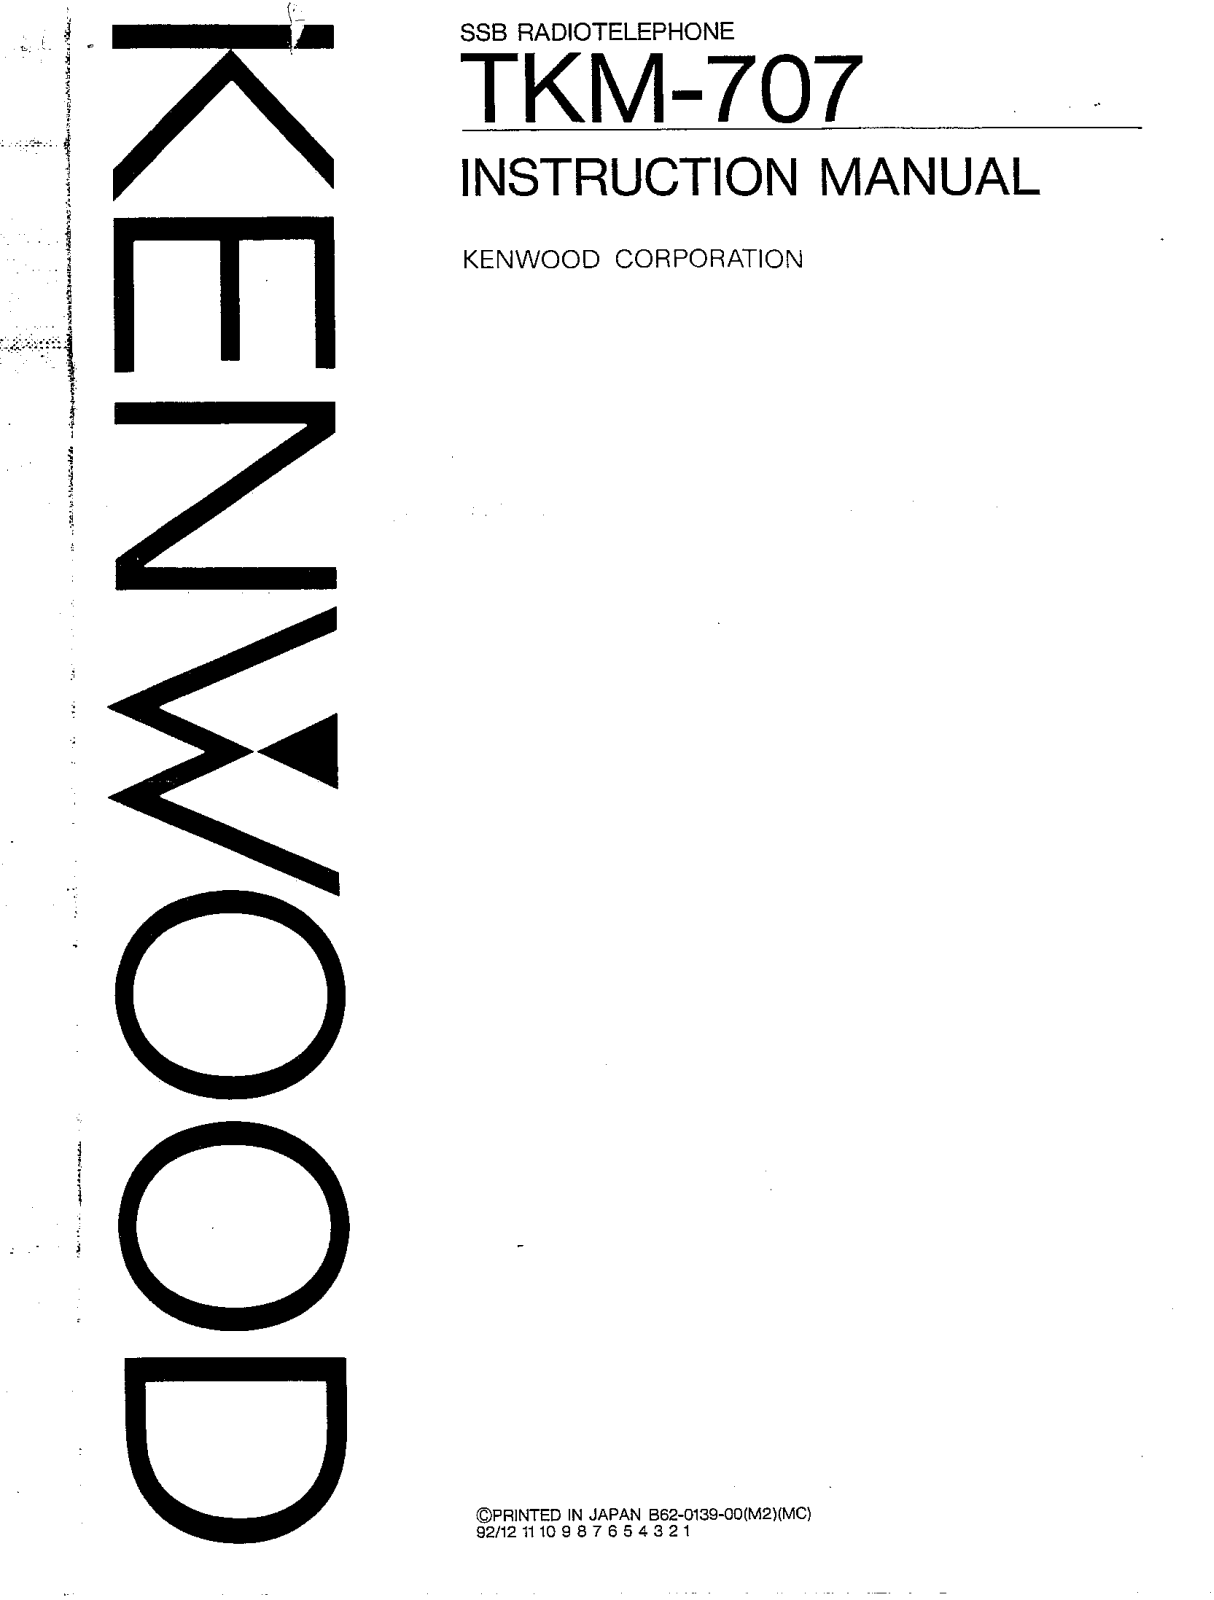 Kenwood TKM-707 User Manual